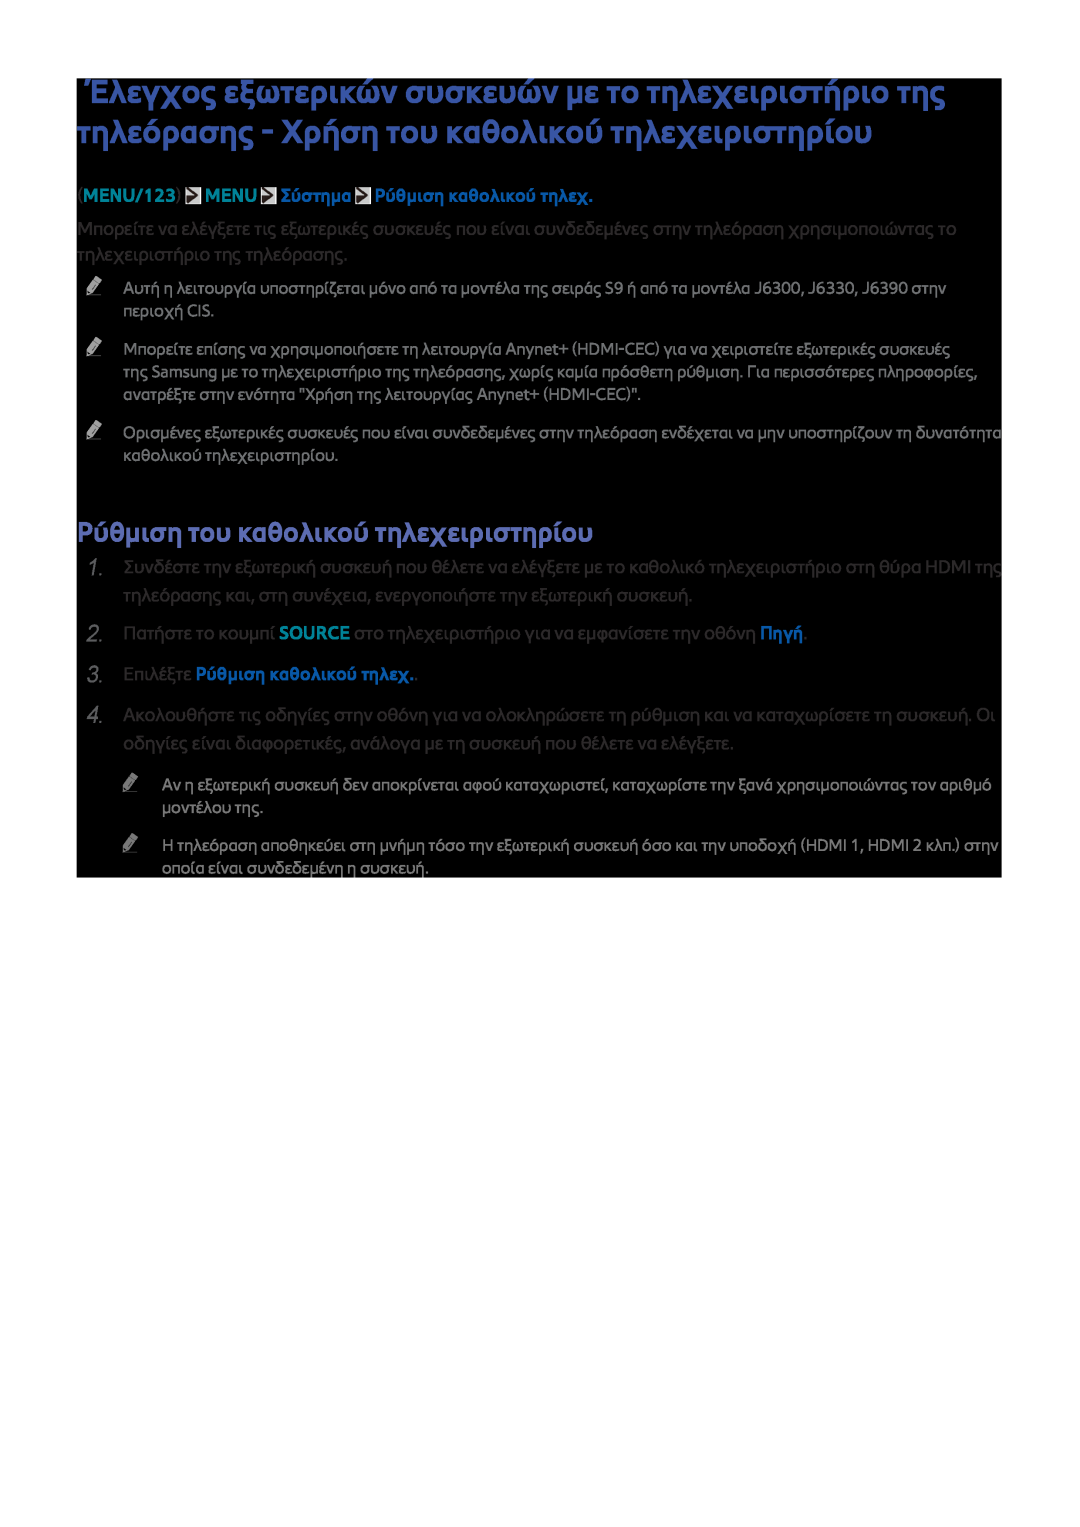 Samsung UE48J5500AWXXH manual Ρύθμιση του καθολικού τηλεχειριστηρίου, MENU/123 MENU Σύστημα Ρύθμιση καθολικού τηλεχ 